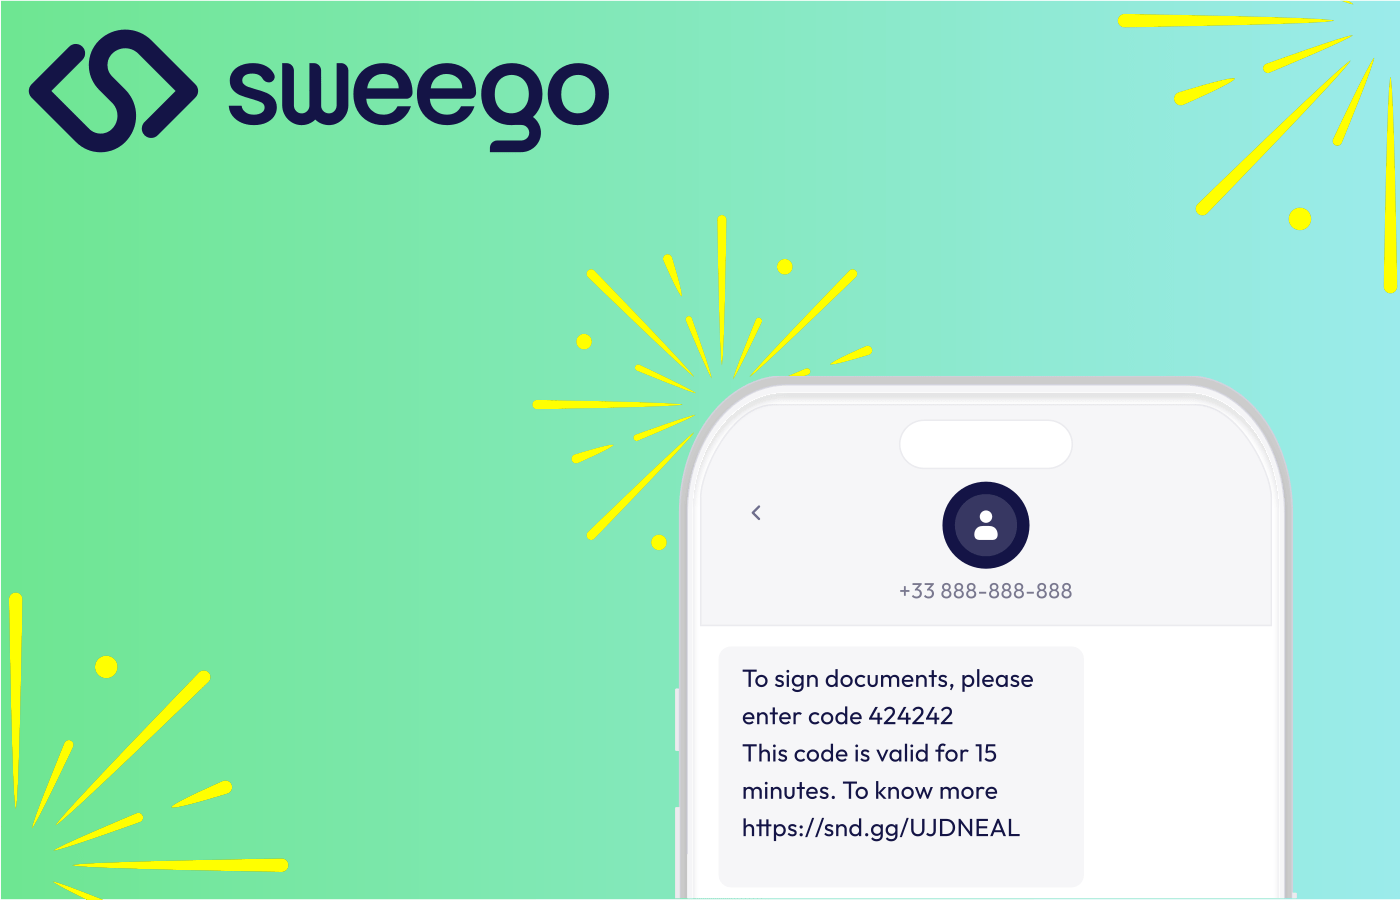 Nouveau: envoyez des SMS avec Sweego